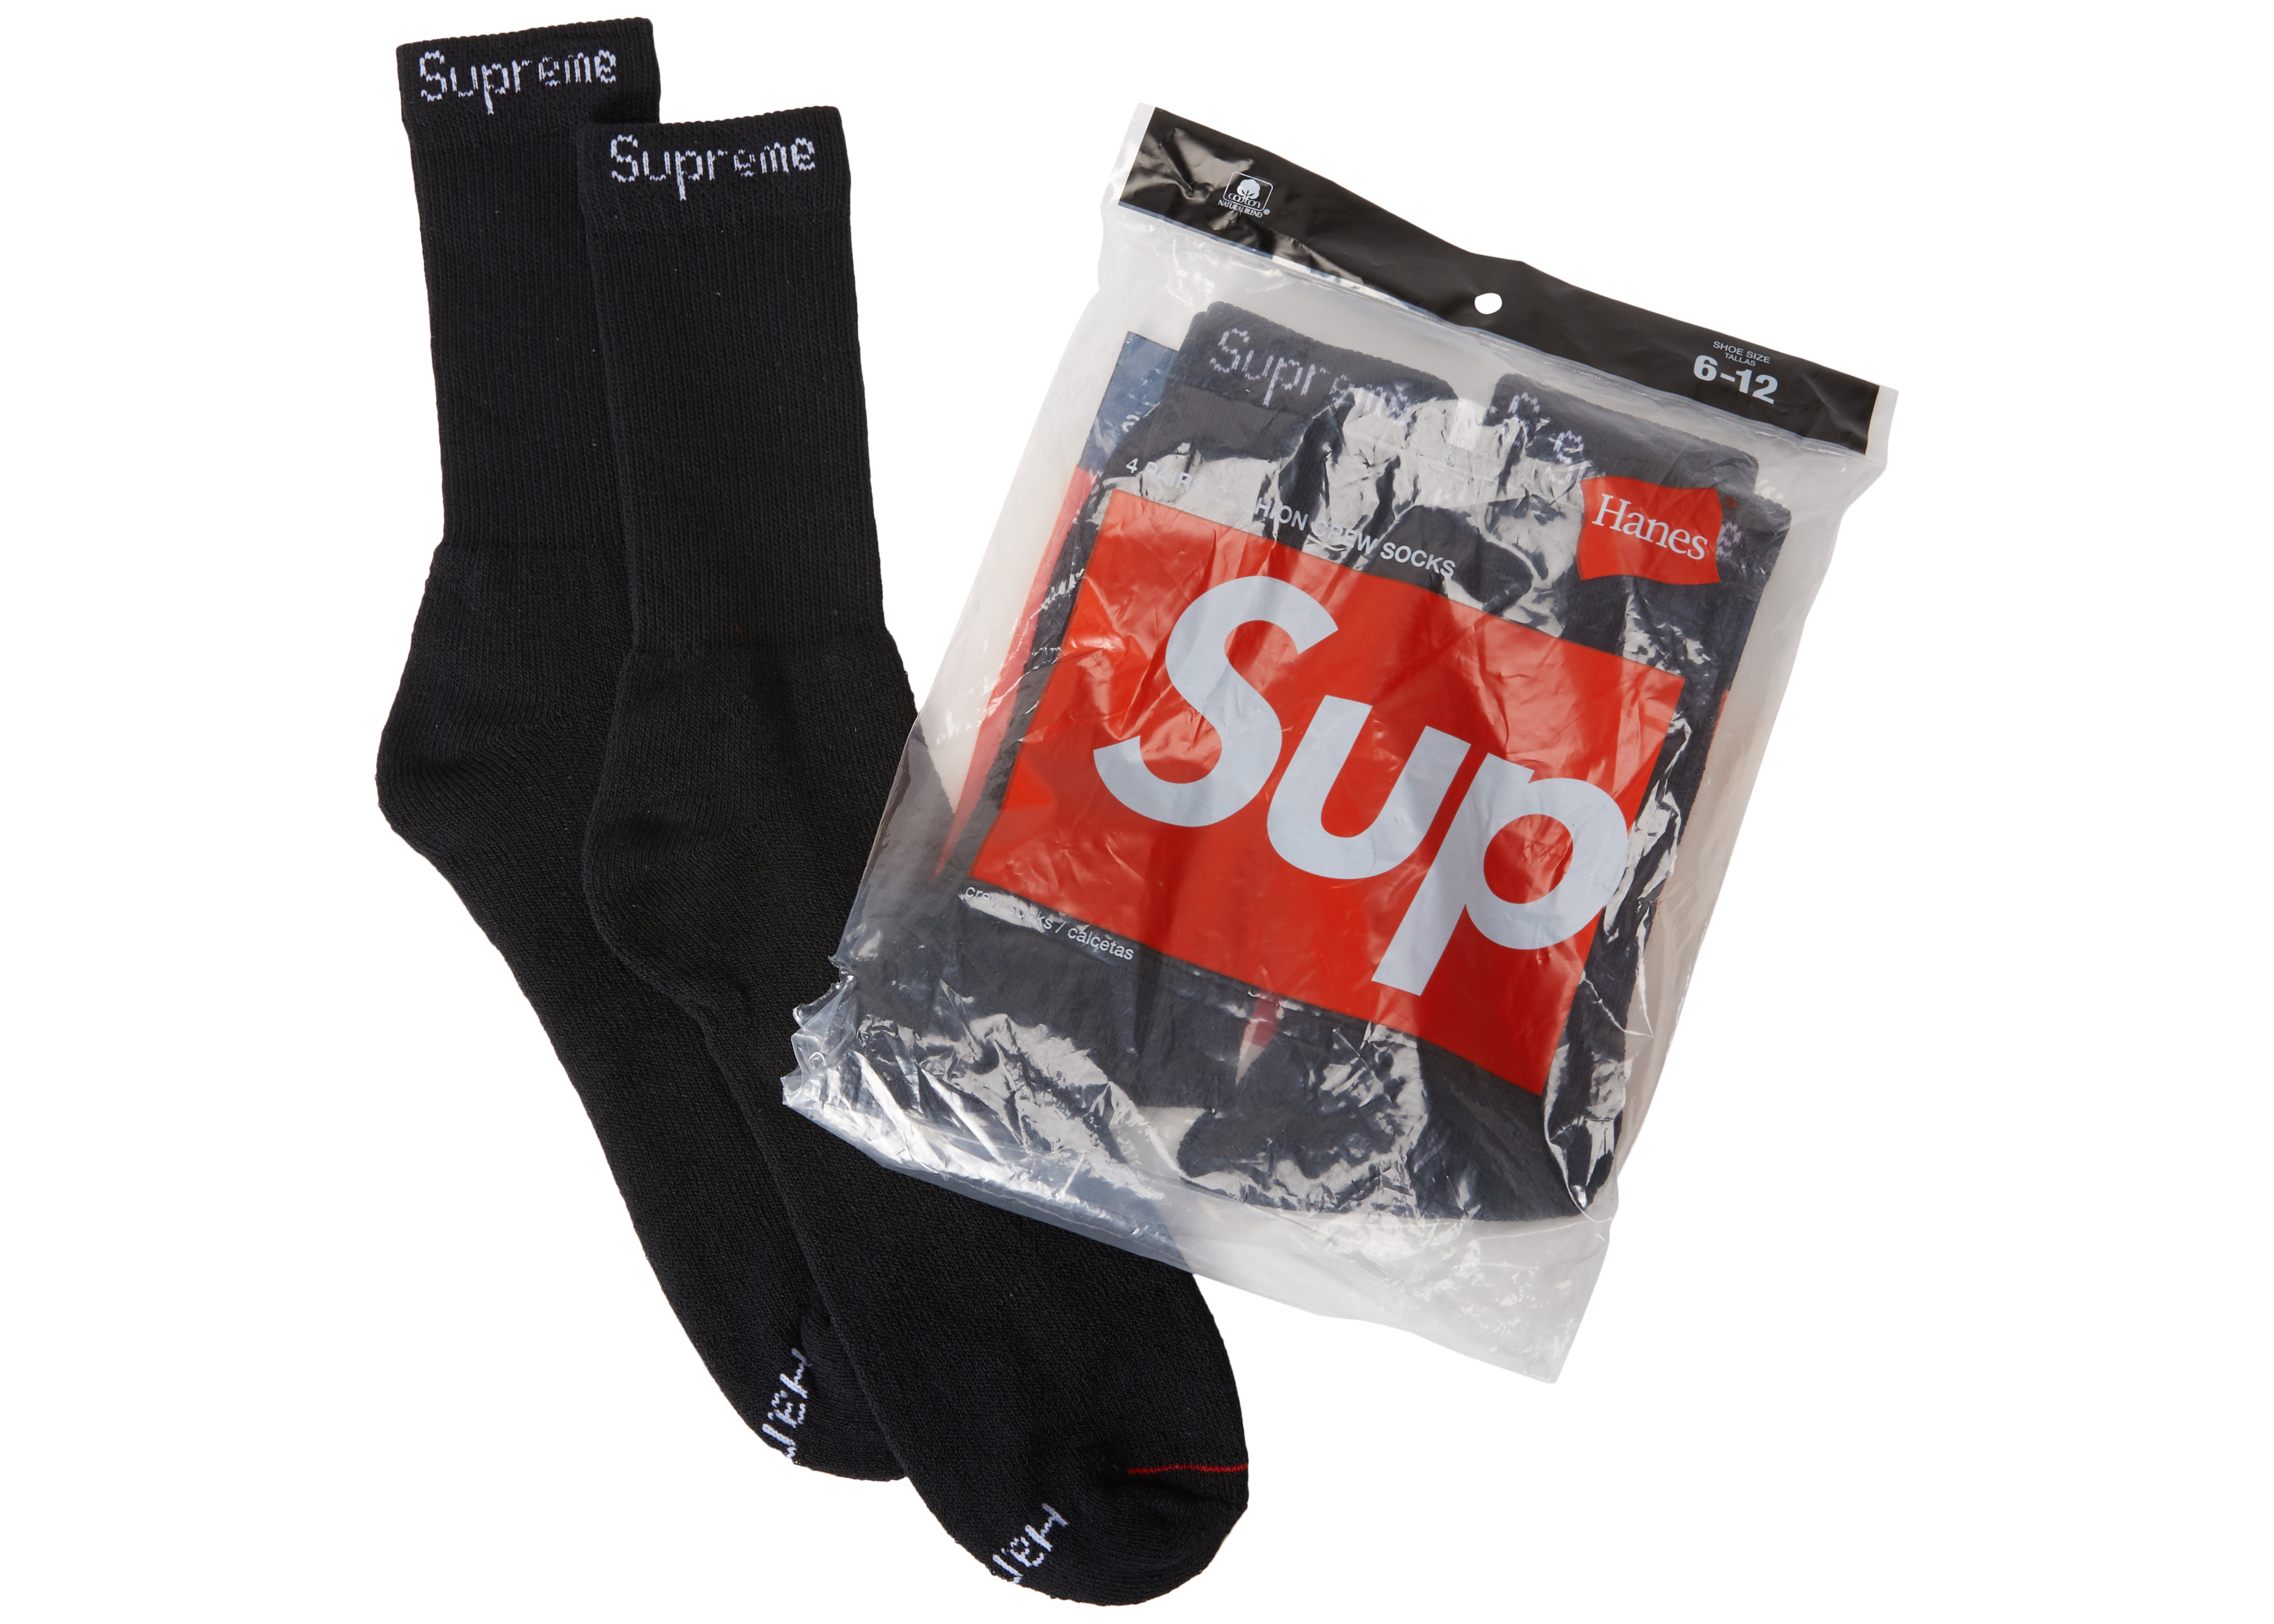 supreme low black  socks